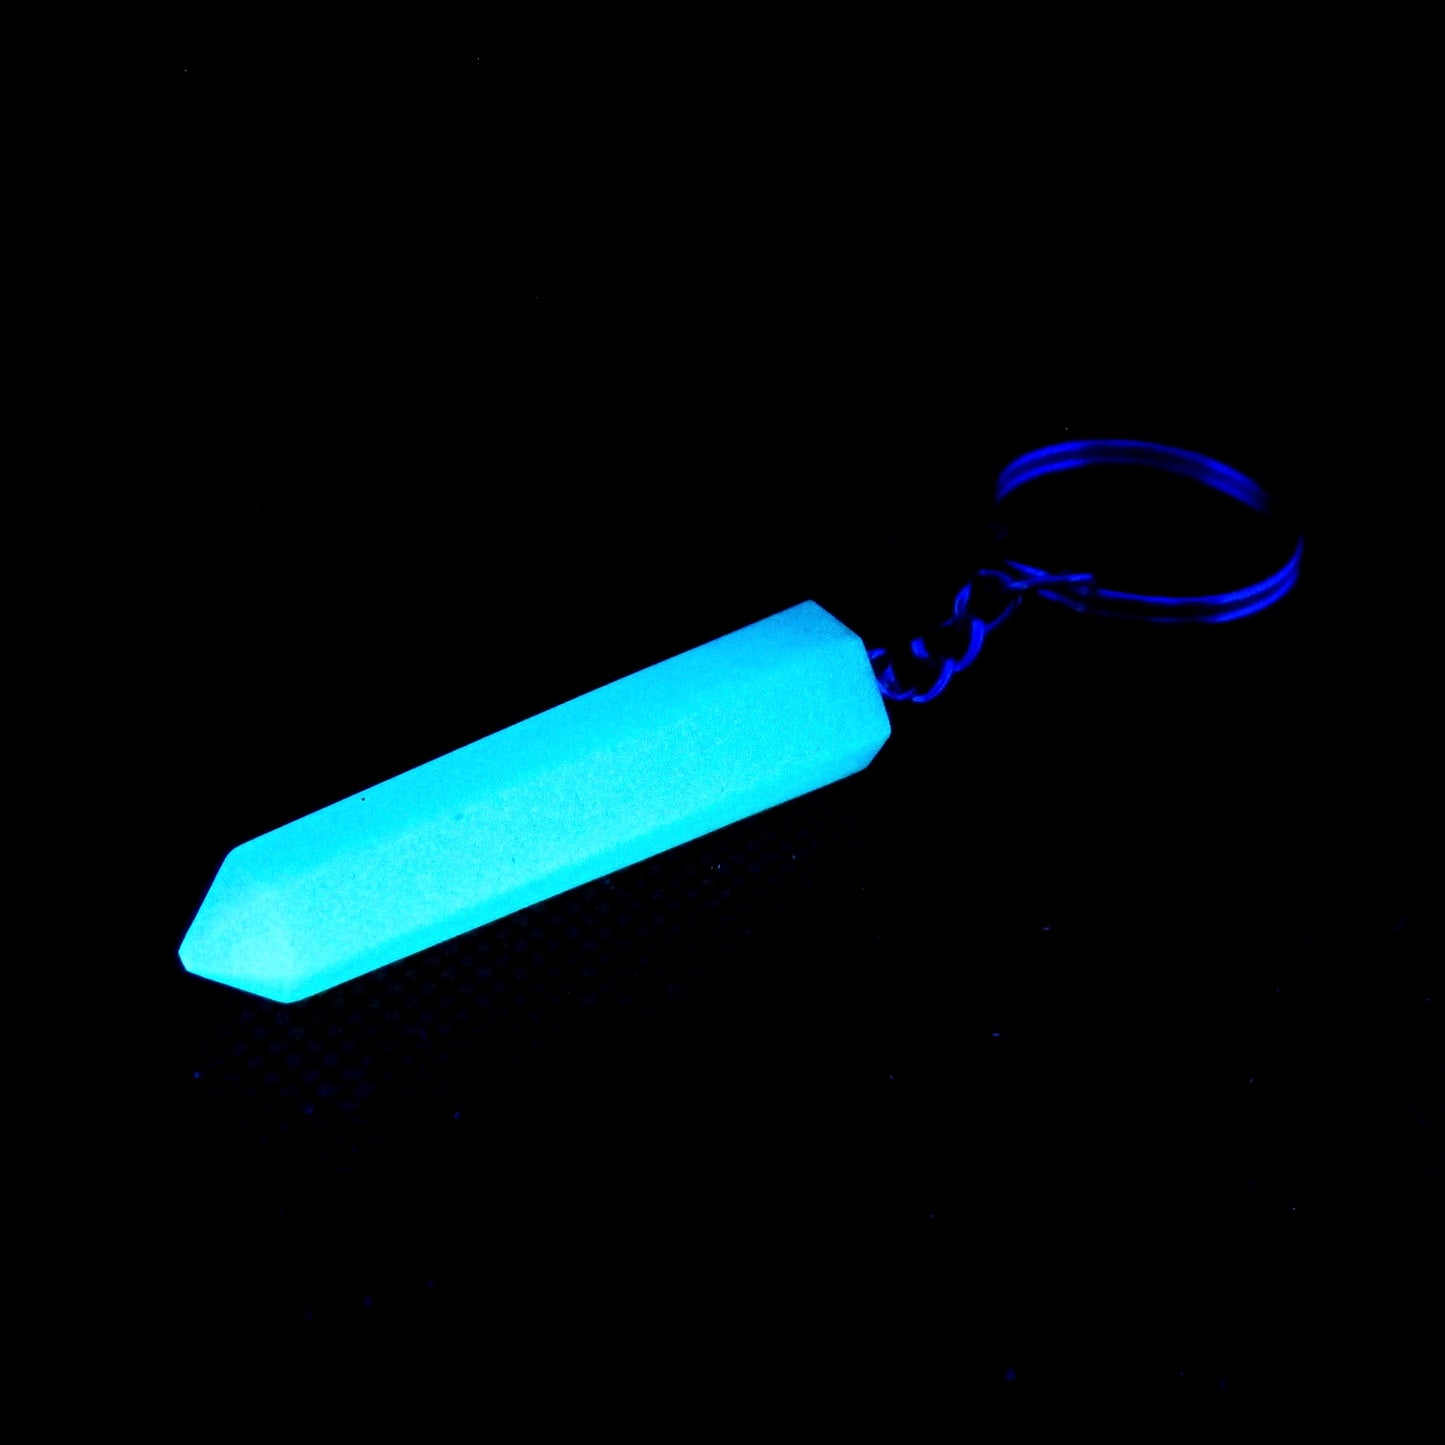 Glow in the Dark Crystal Keychain